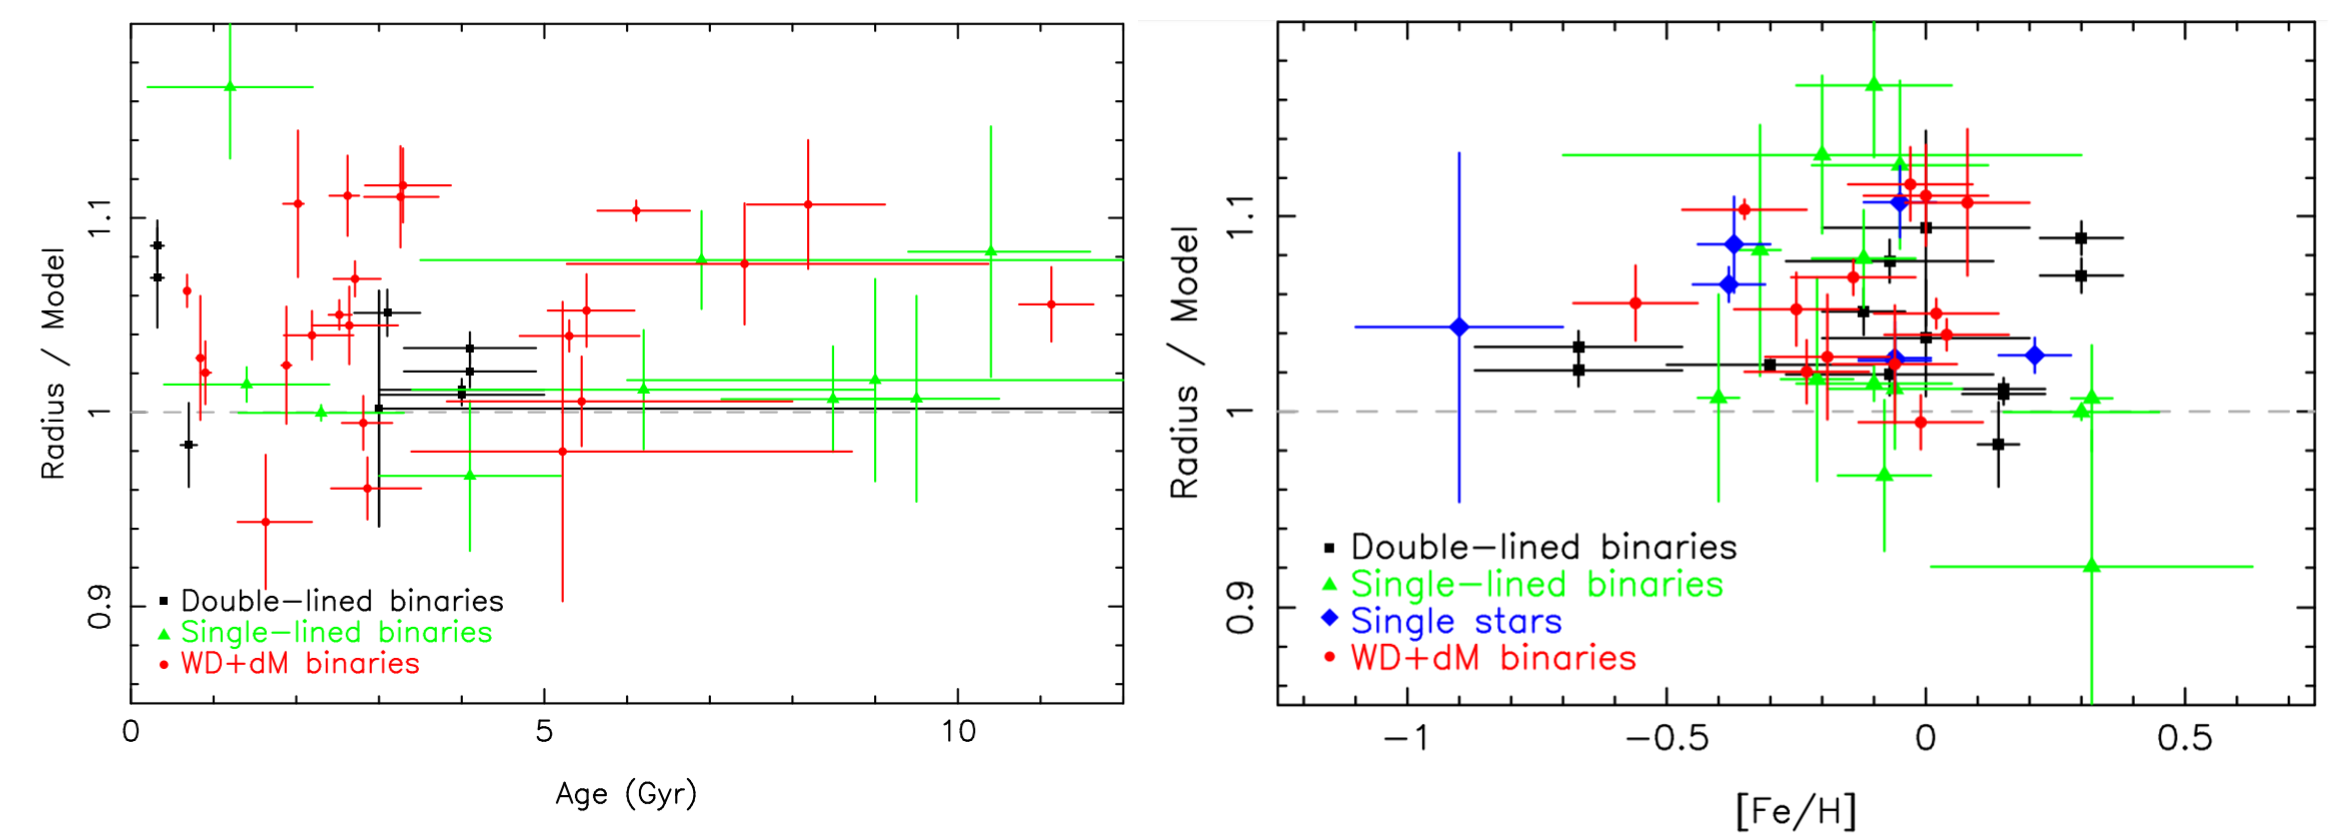 M-dwarf radii vs age and metallicty